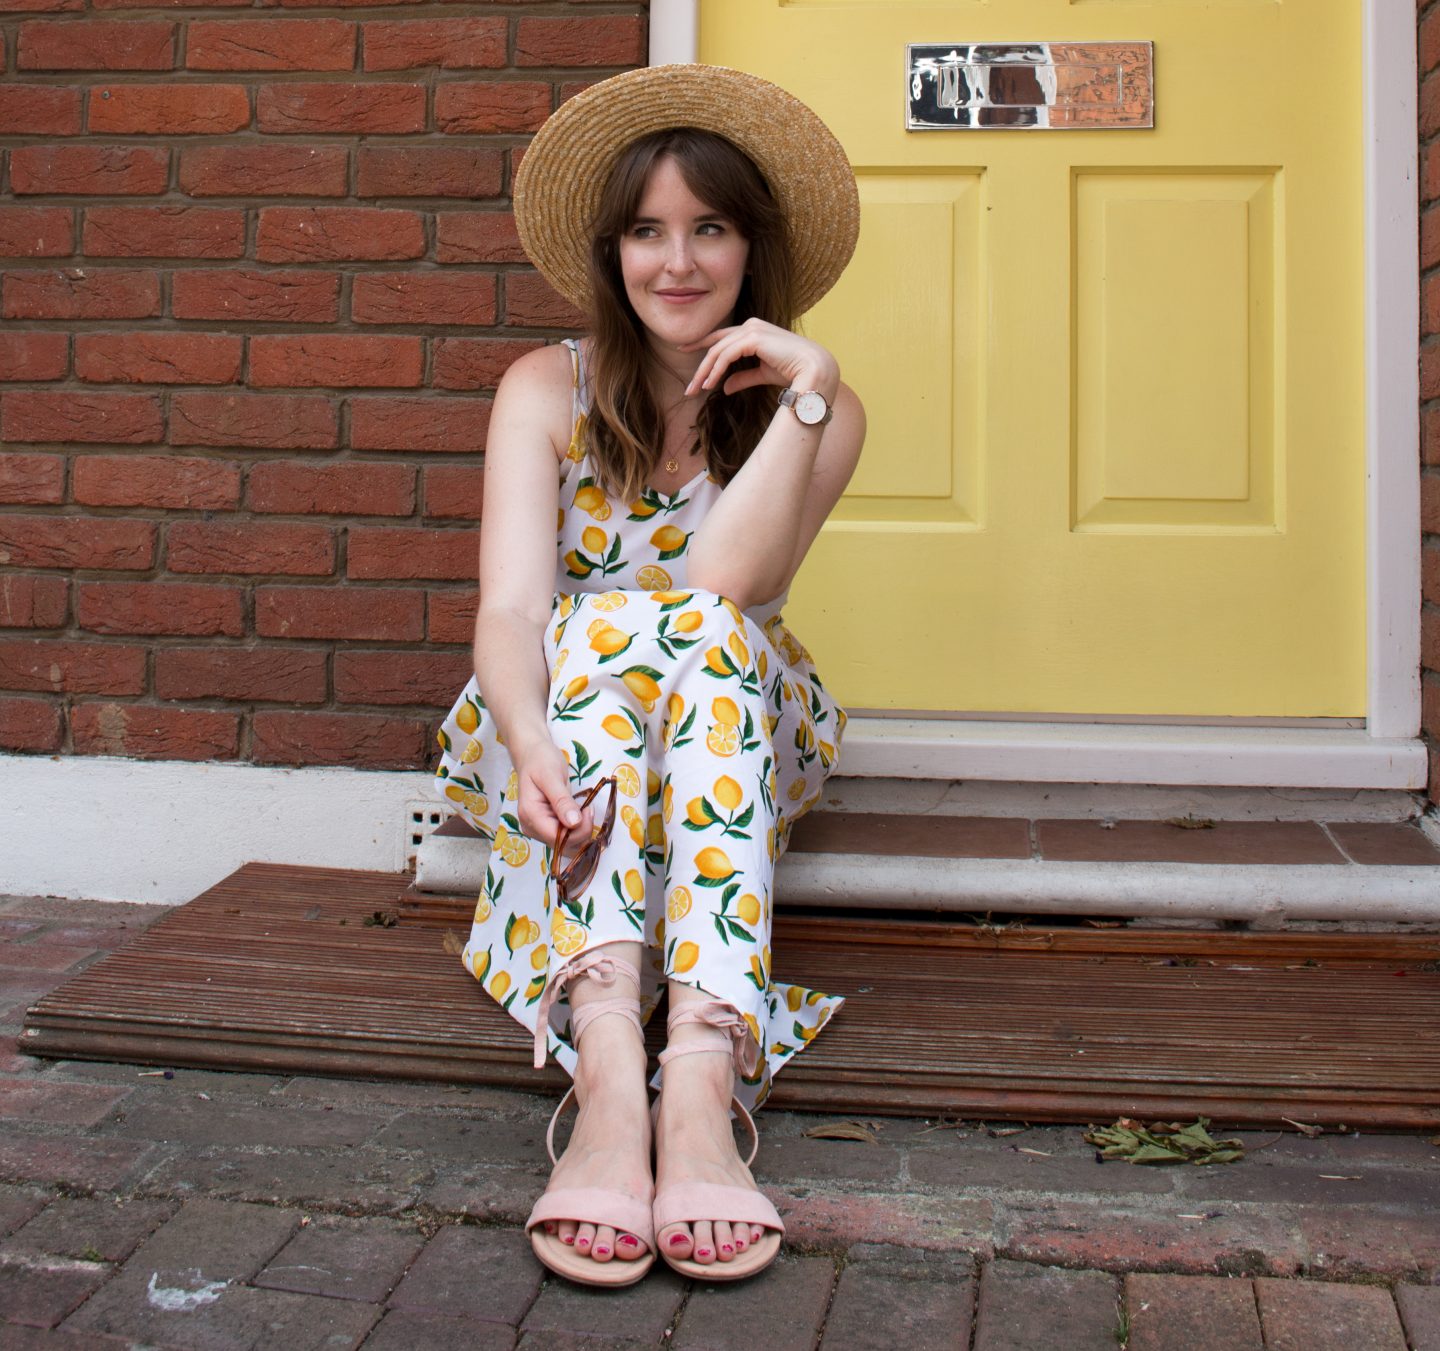 Nikki wearing a lemon print sundress and straw boater hat